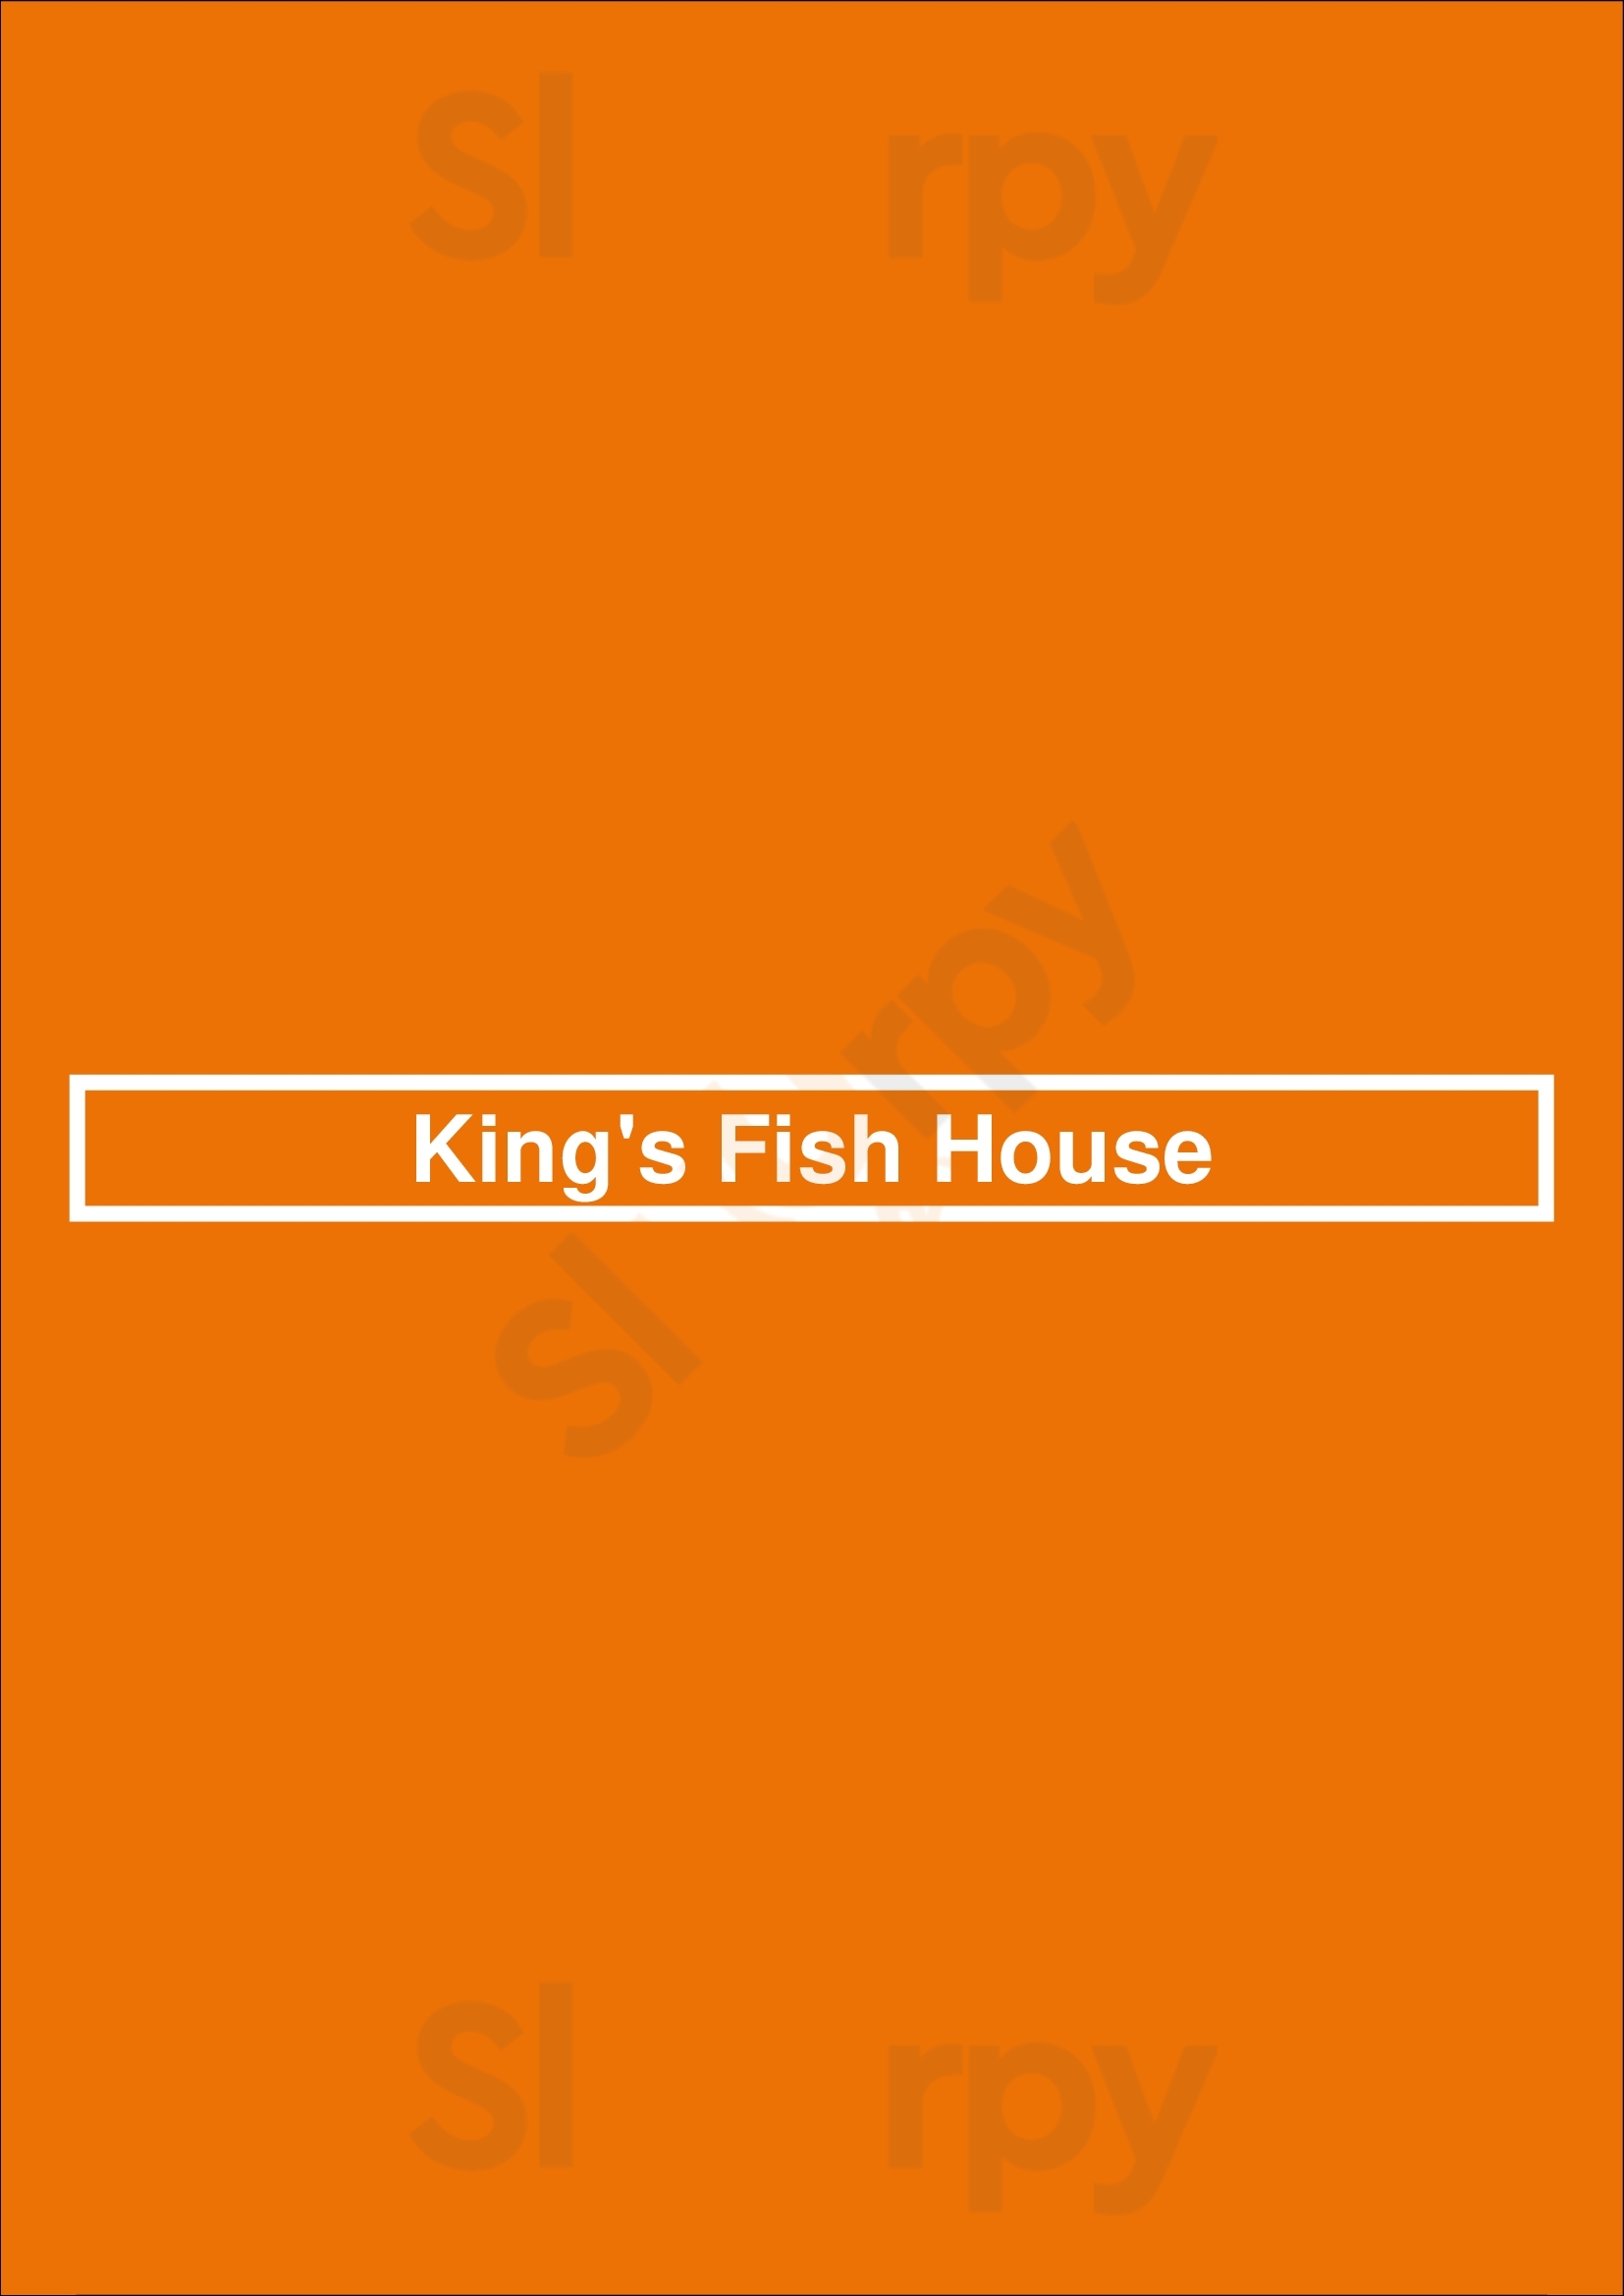 King's Fish House Long Beach Menu - 1